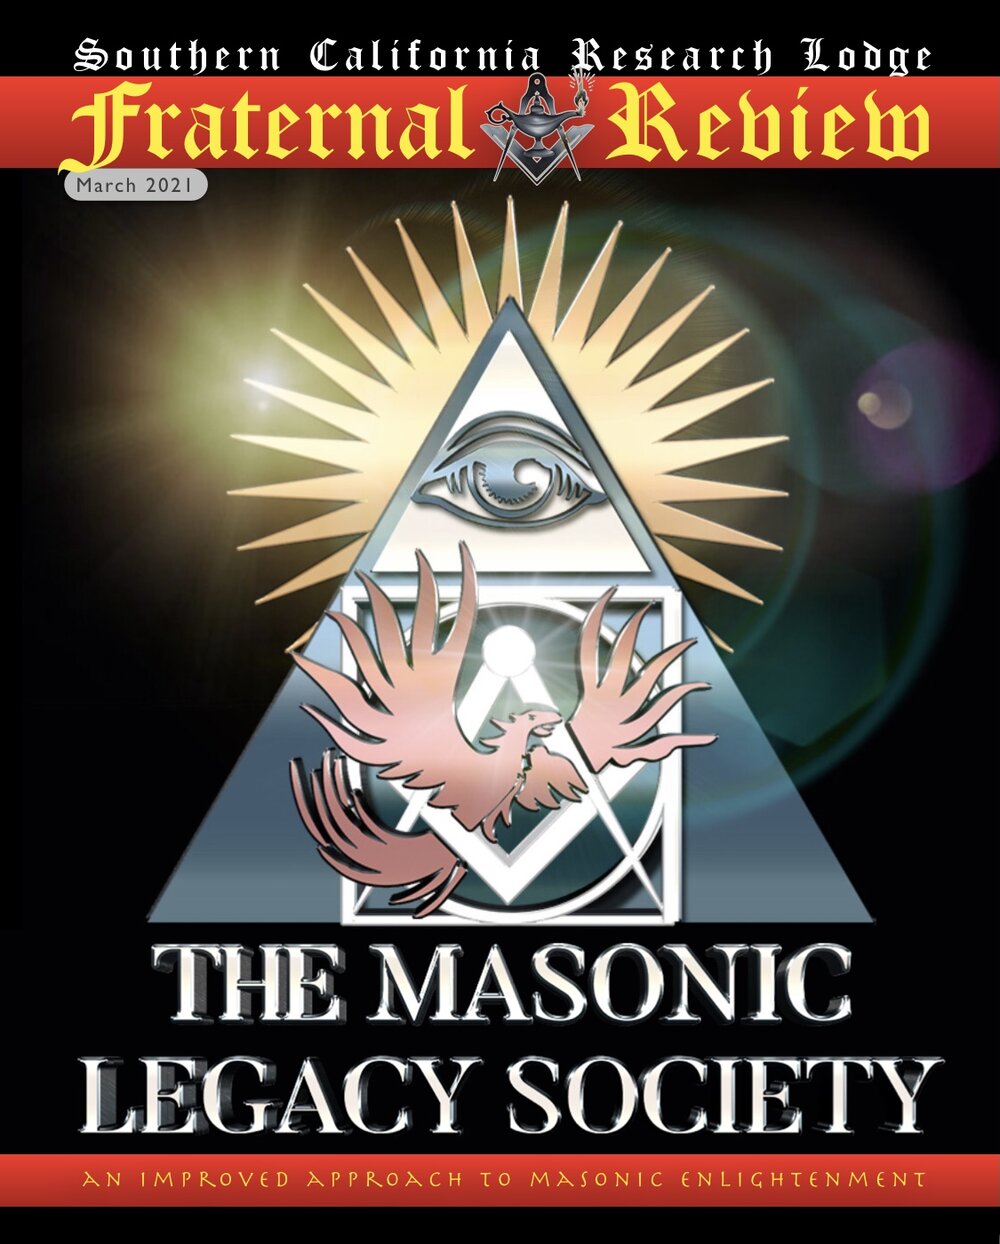 Masonic Enlightenment